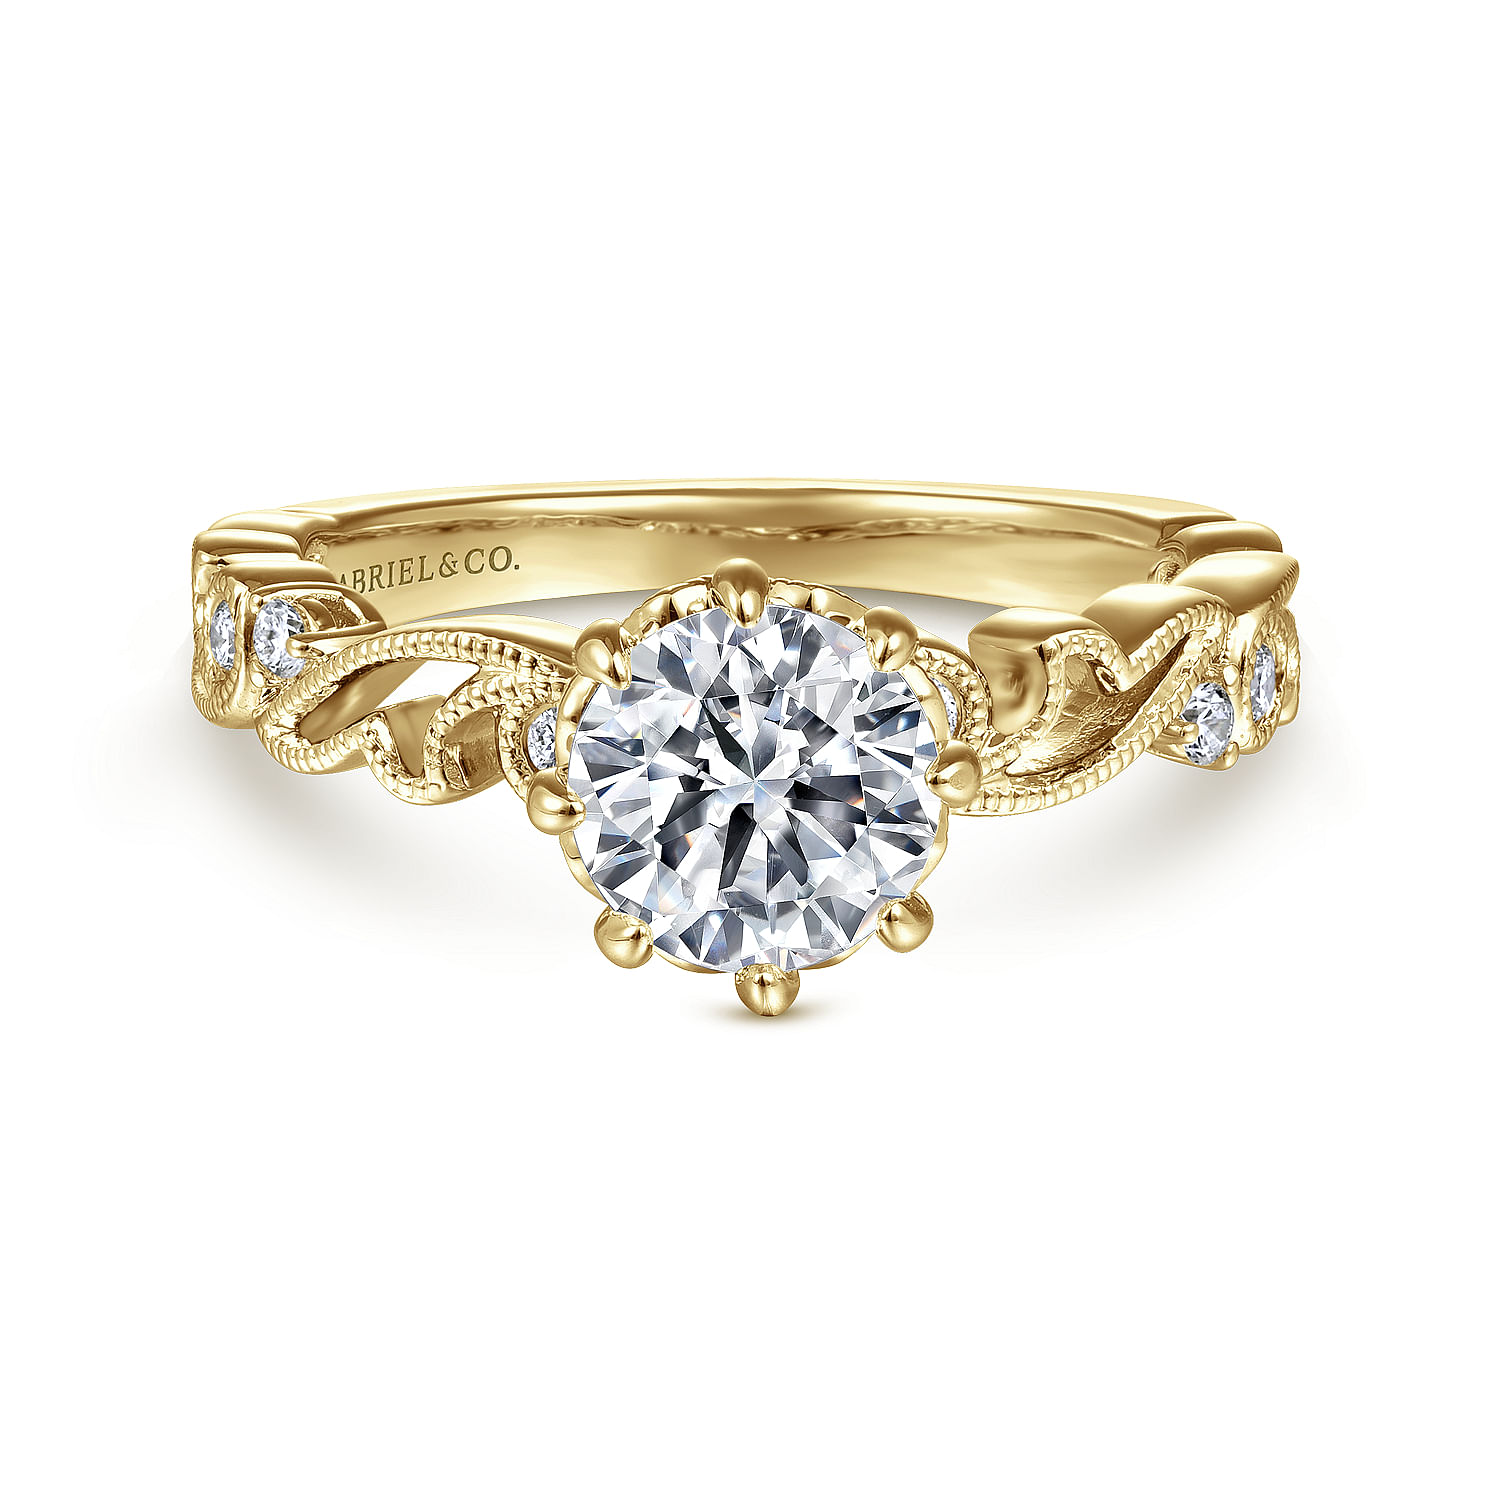 Arlington - Vintage Inspired 14K Yellow Gold Round Diamond Engagement Ring